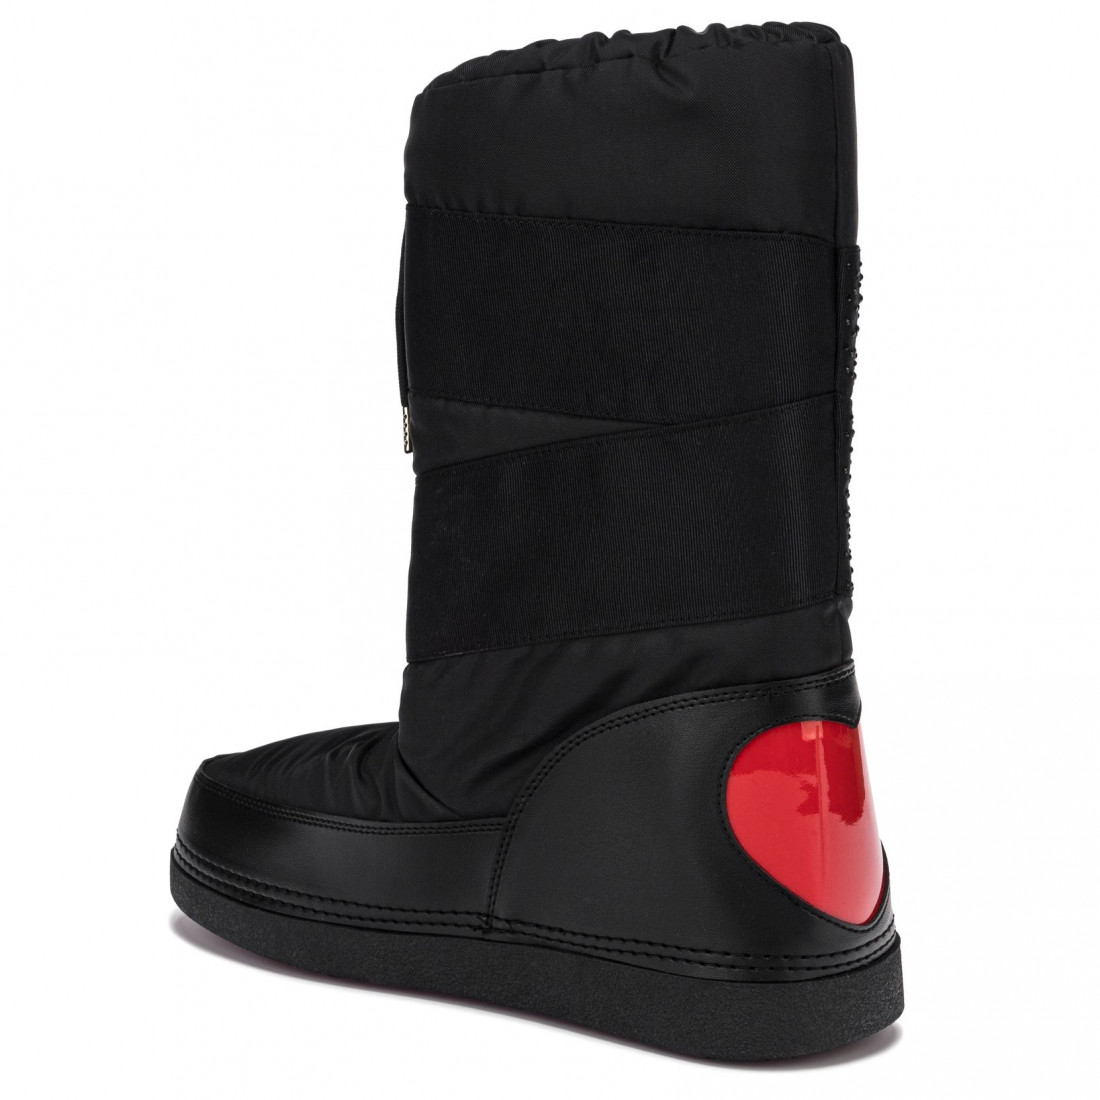 love moschino boots